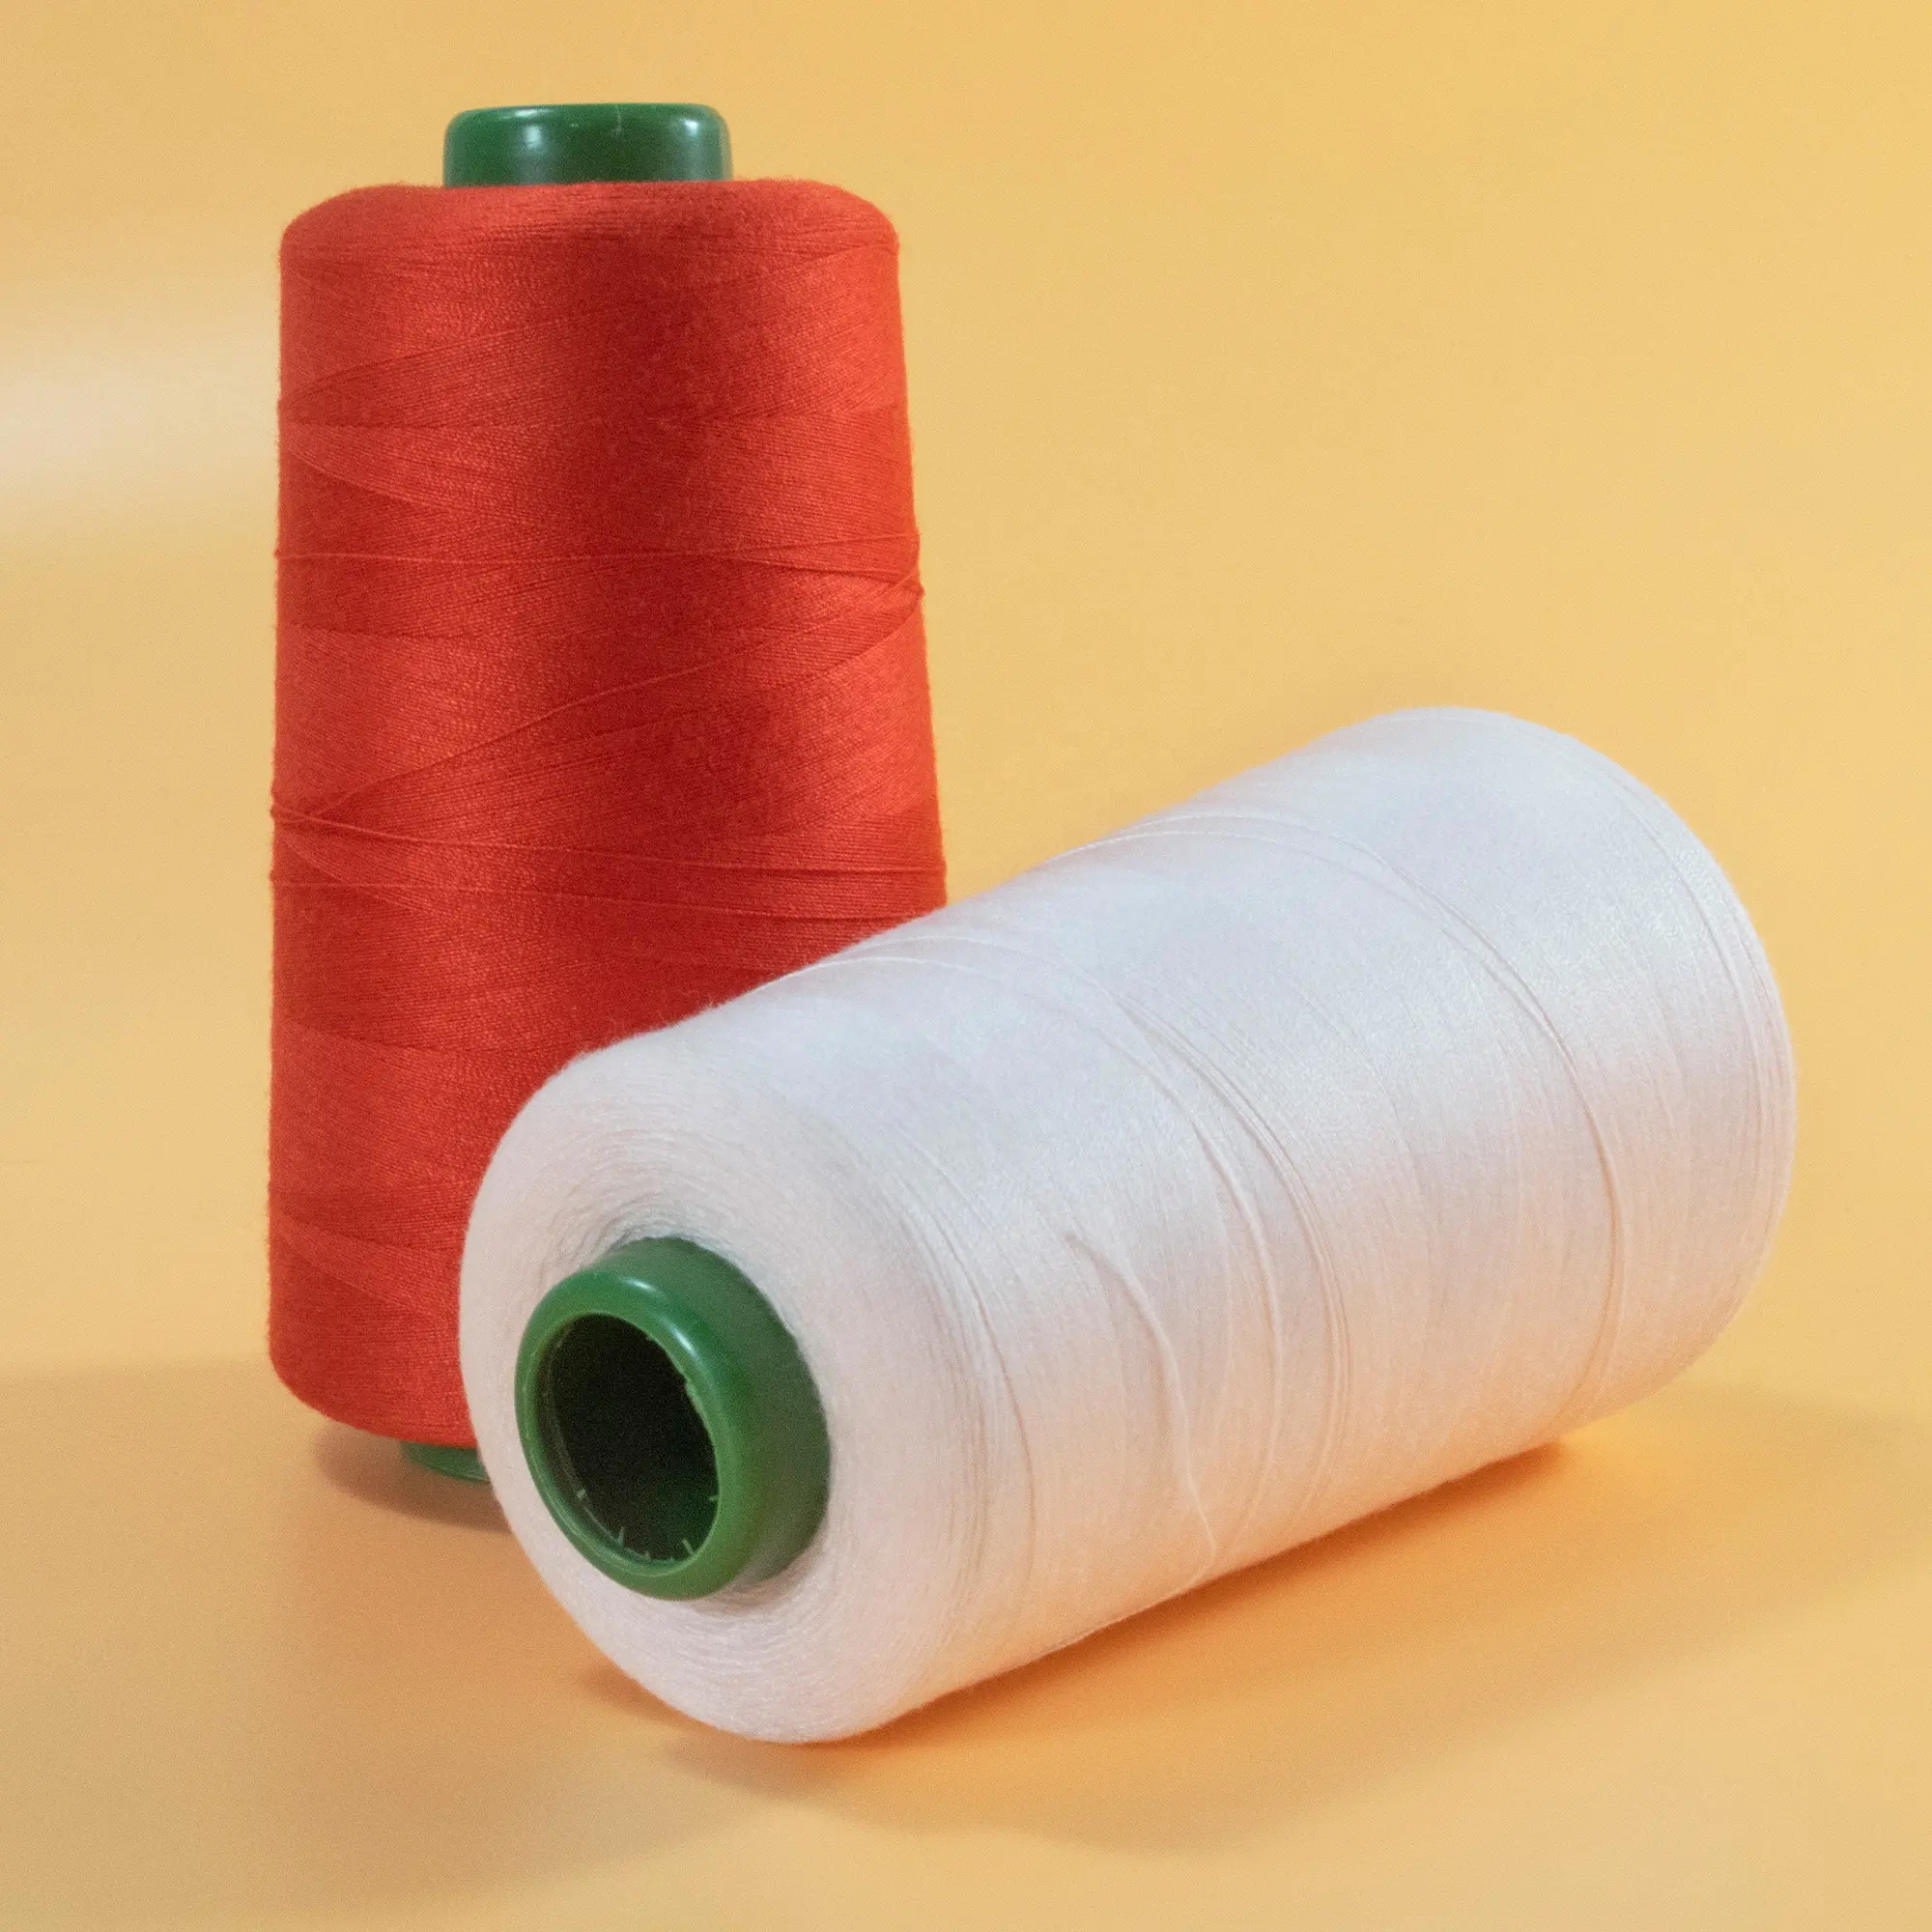 402 hilos de costura Polyester faden Nähmaschinen faden Kleidung Nähgarn